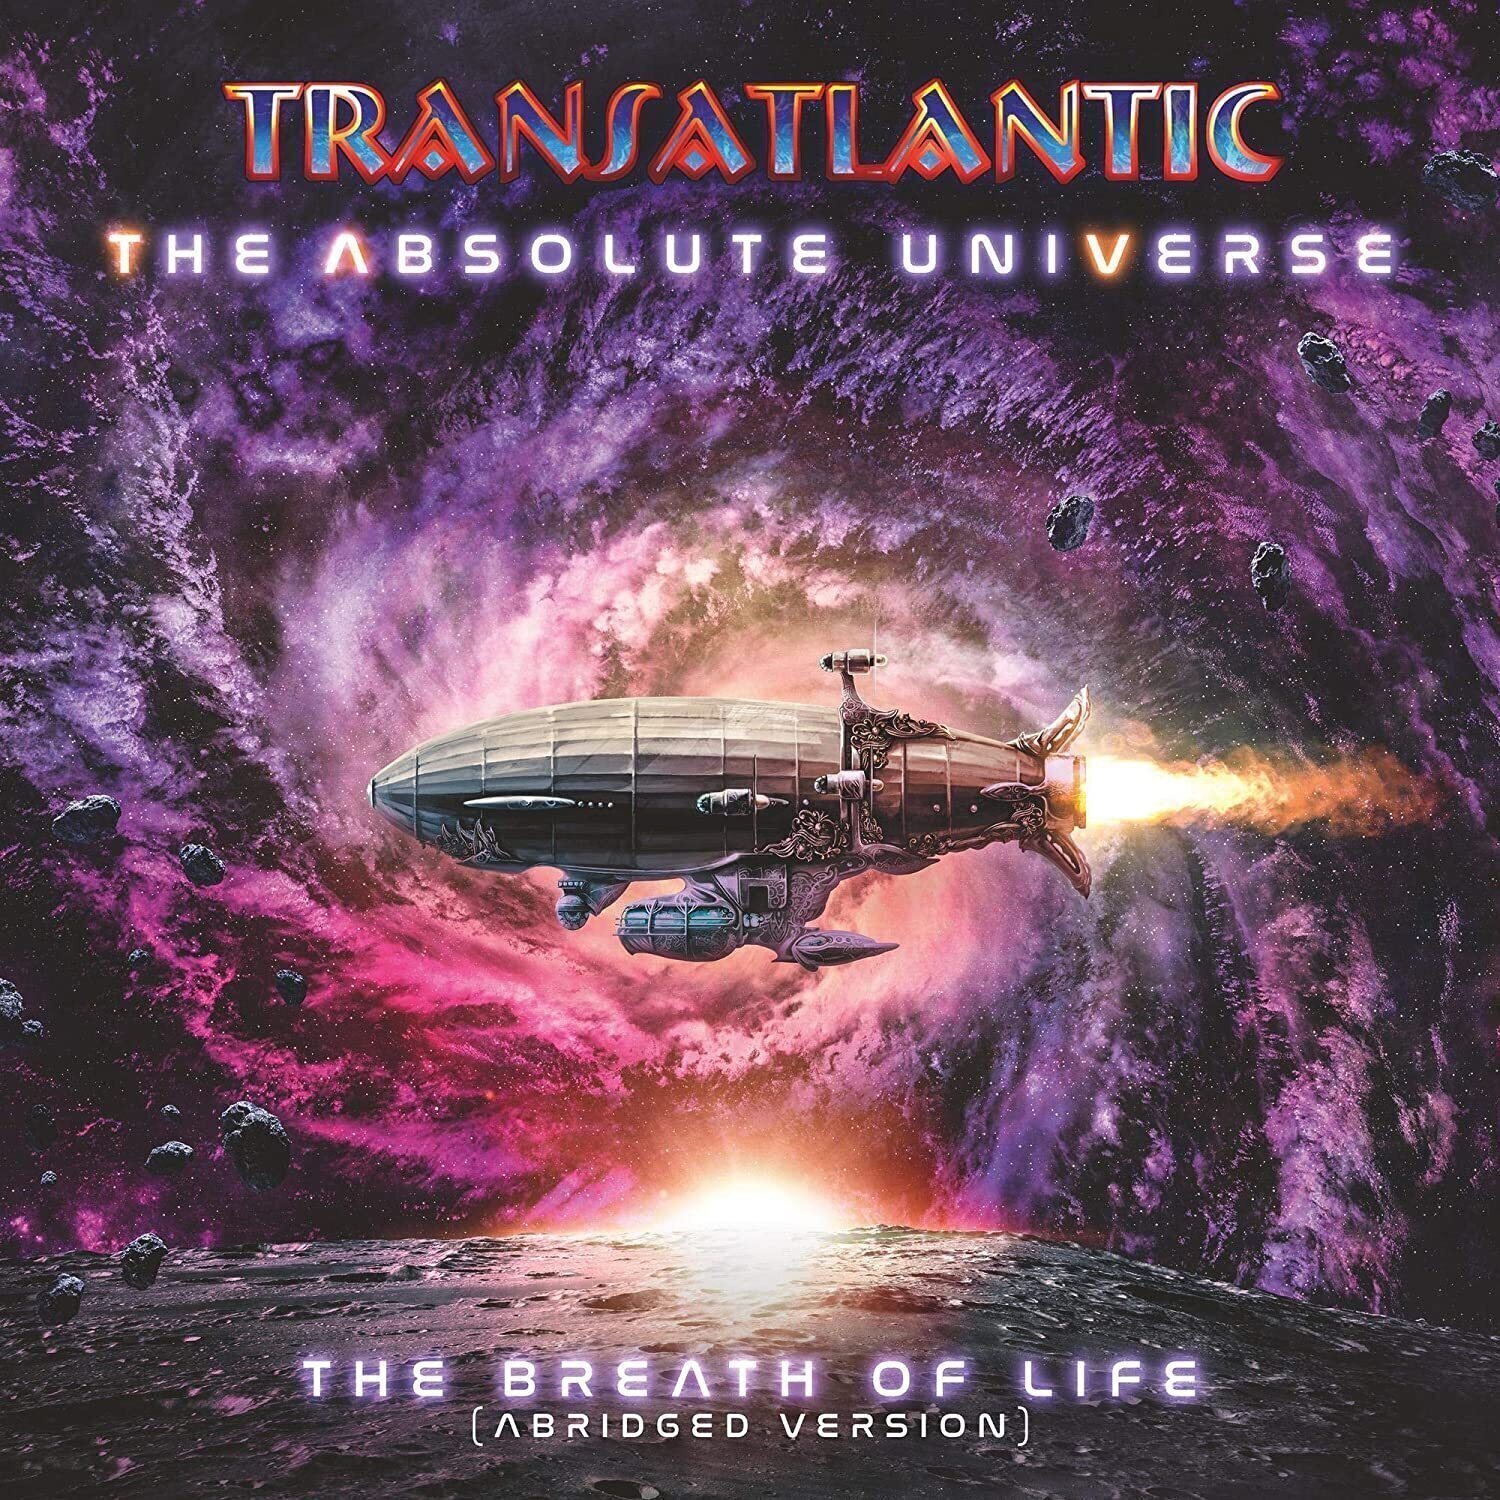 Vinyl Record Transatlantic - The Absolute Universe - The Breath Of Life (2 LP + CD)